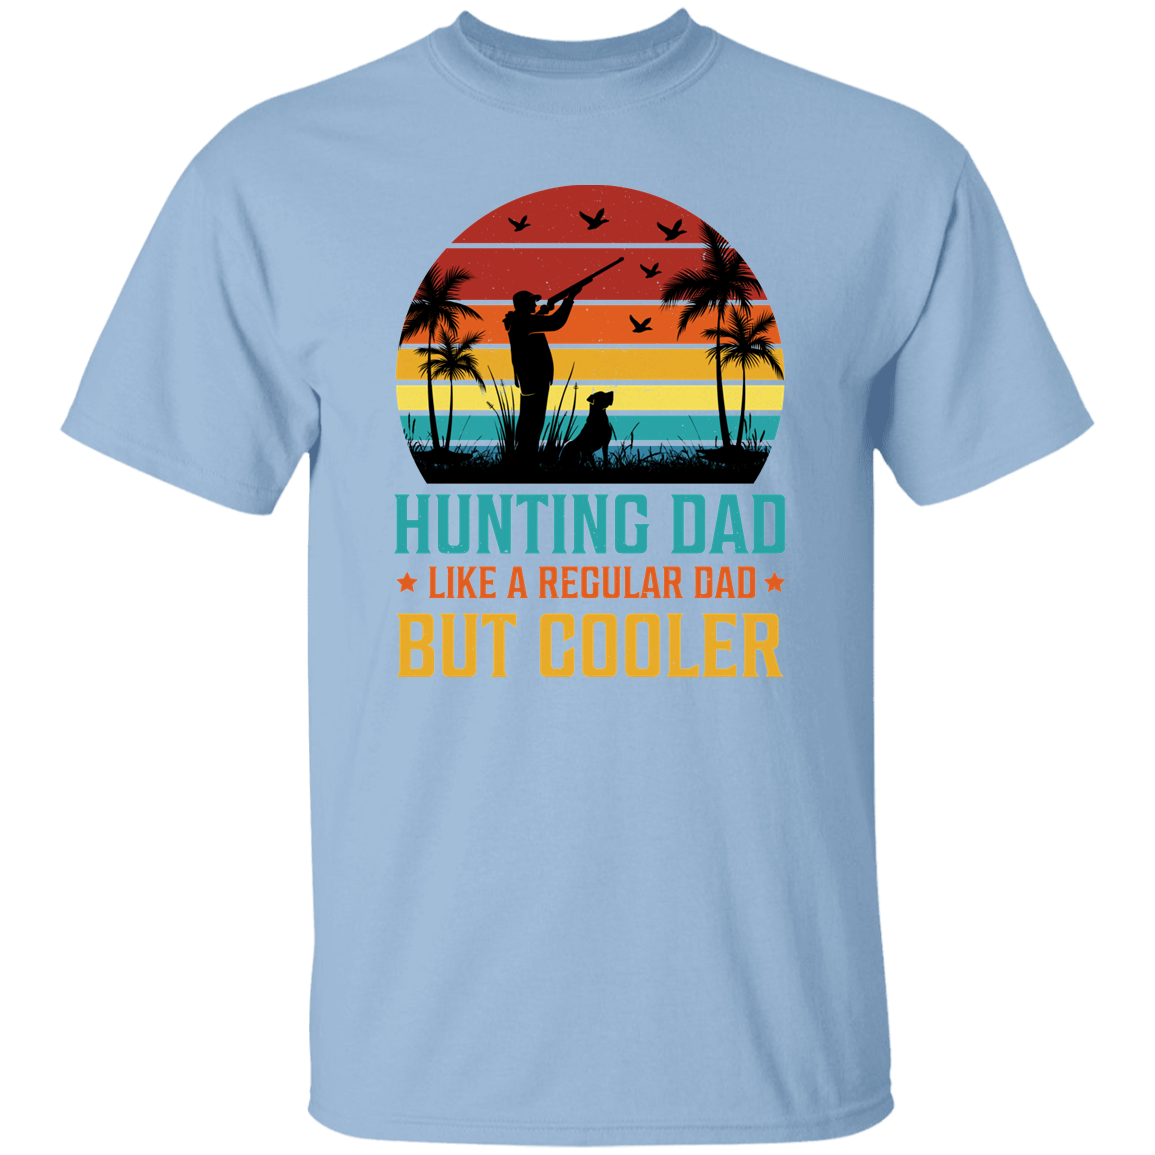 Hunting Dad Only Cooler Shirt - G500 5.3 oz. T-Shirt